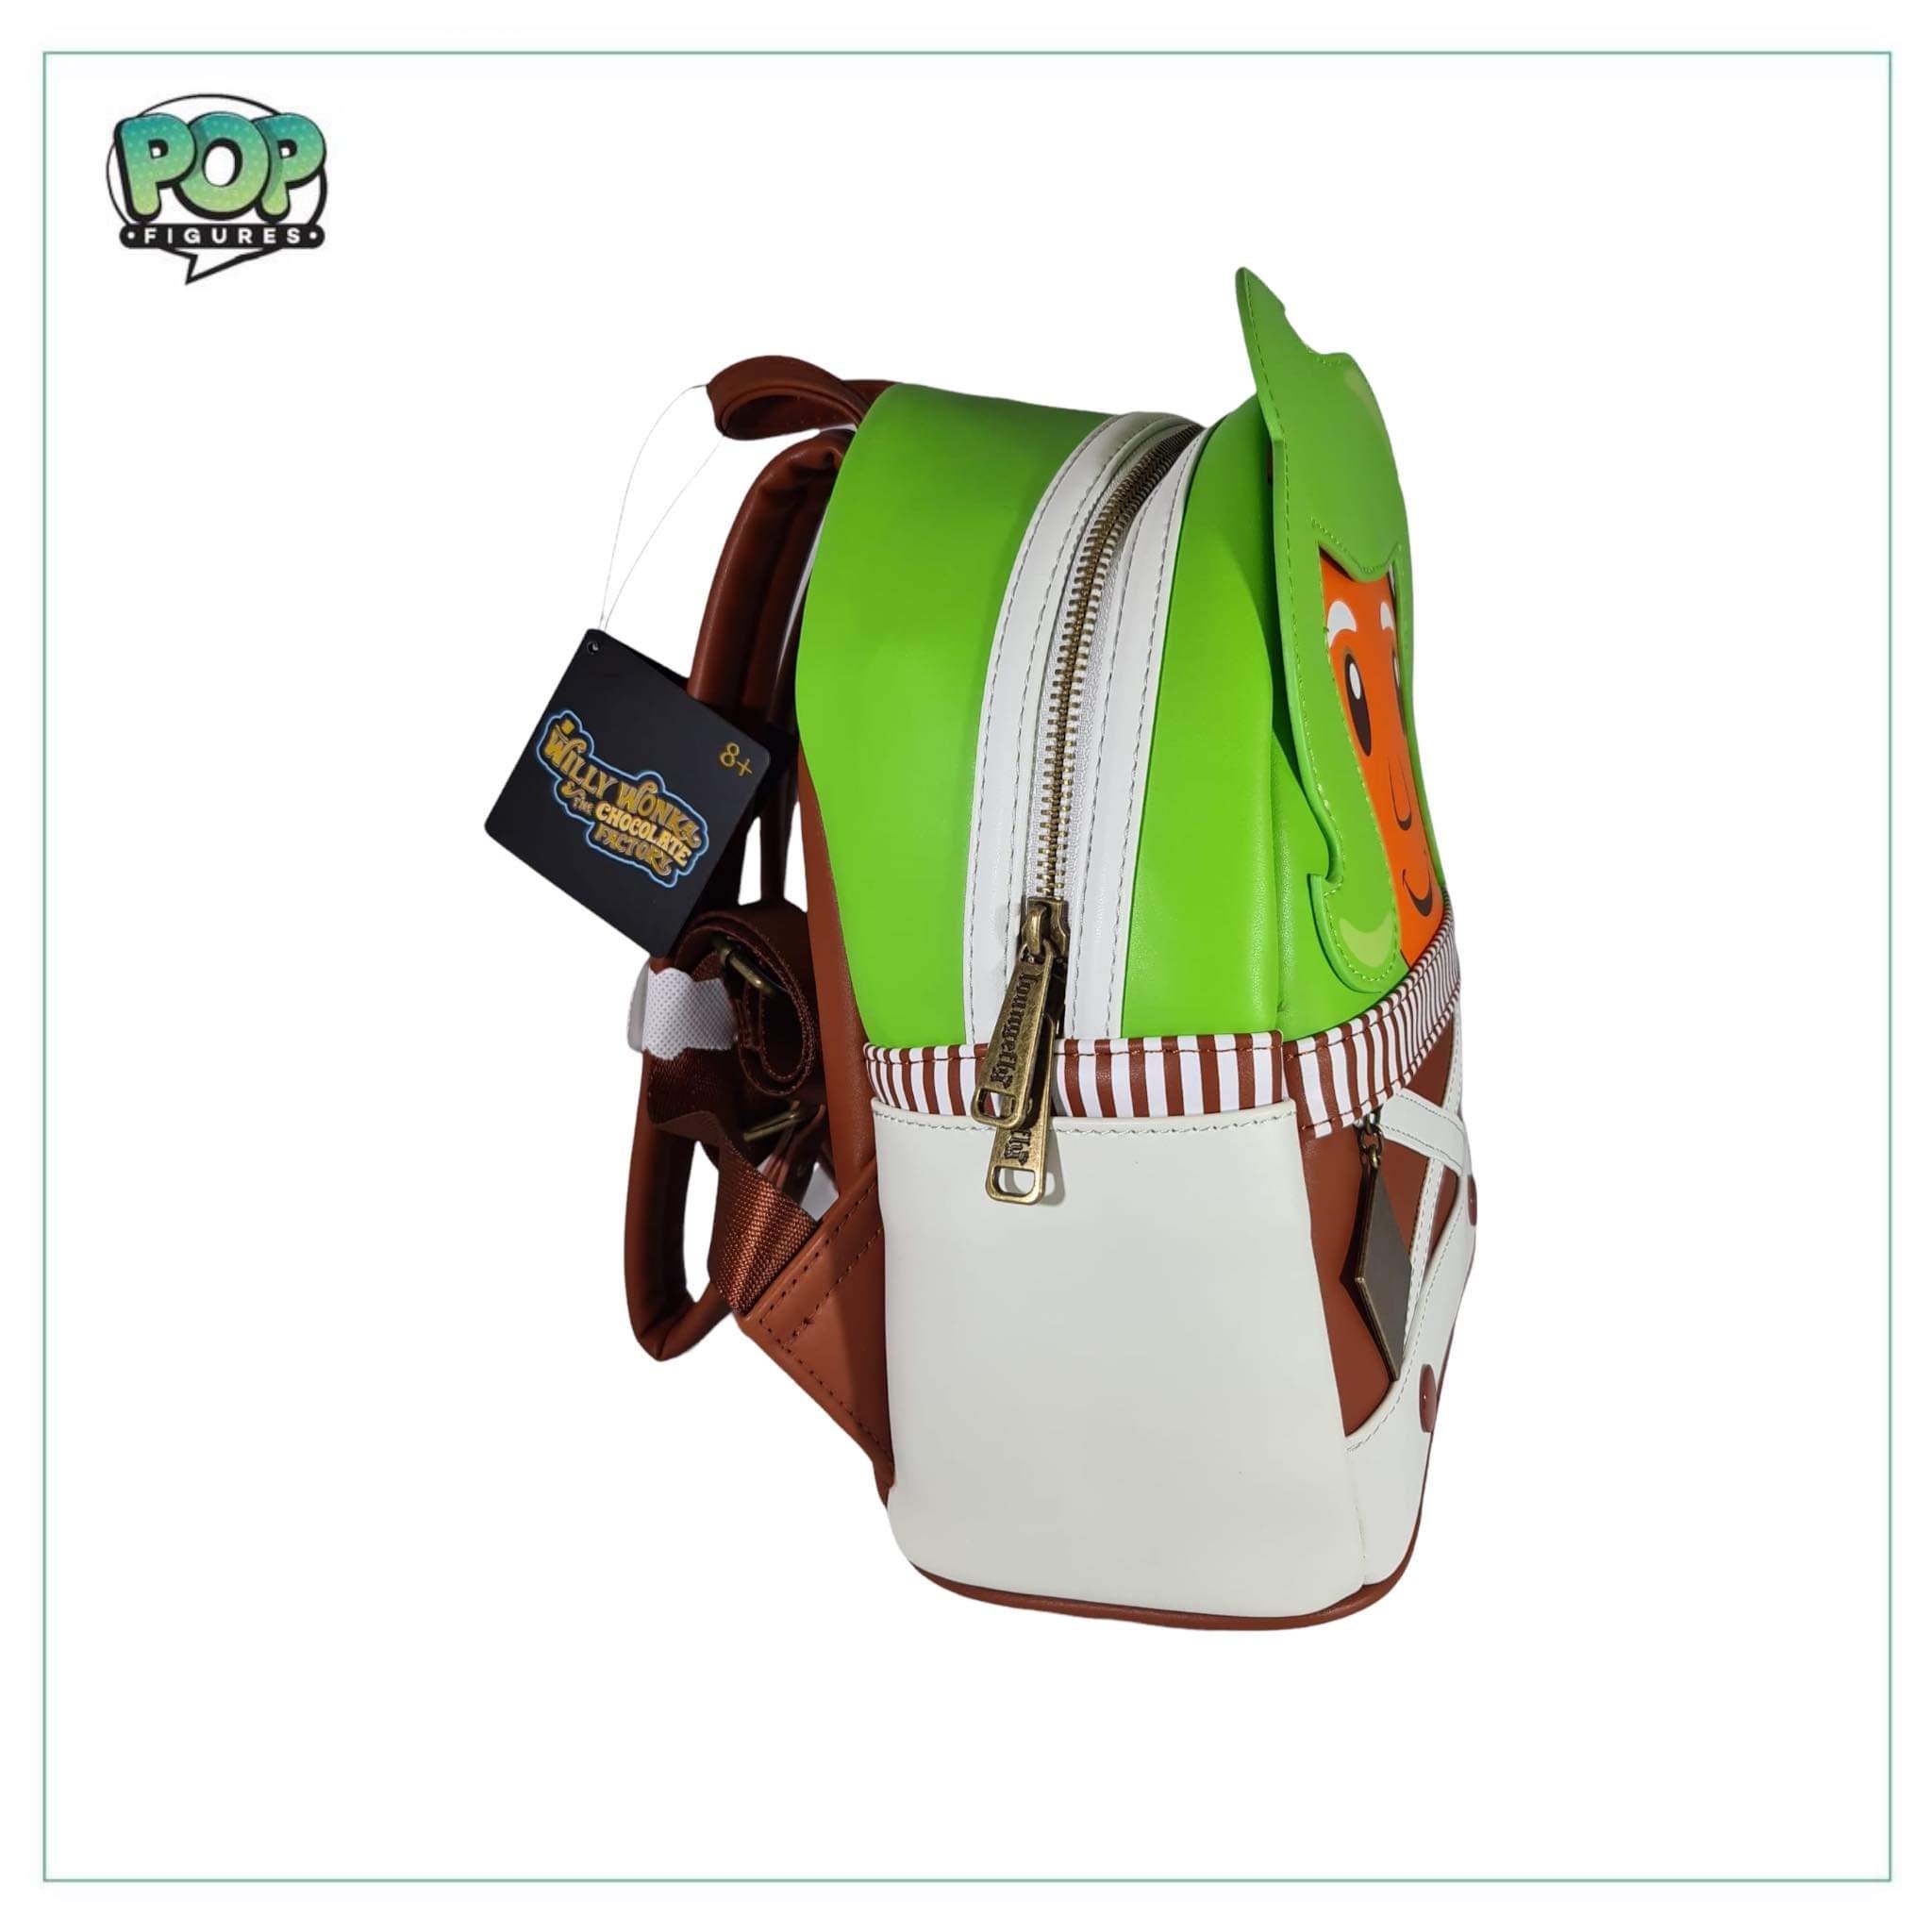 Popfigures Exclusive Loungefly Willy Wonka Oompa Loompa Mini Backpack